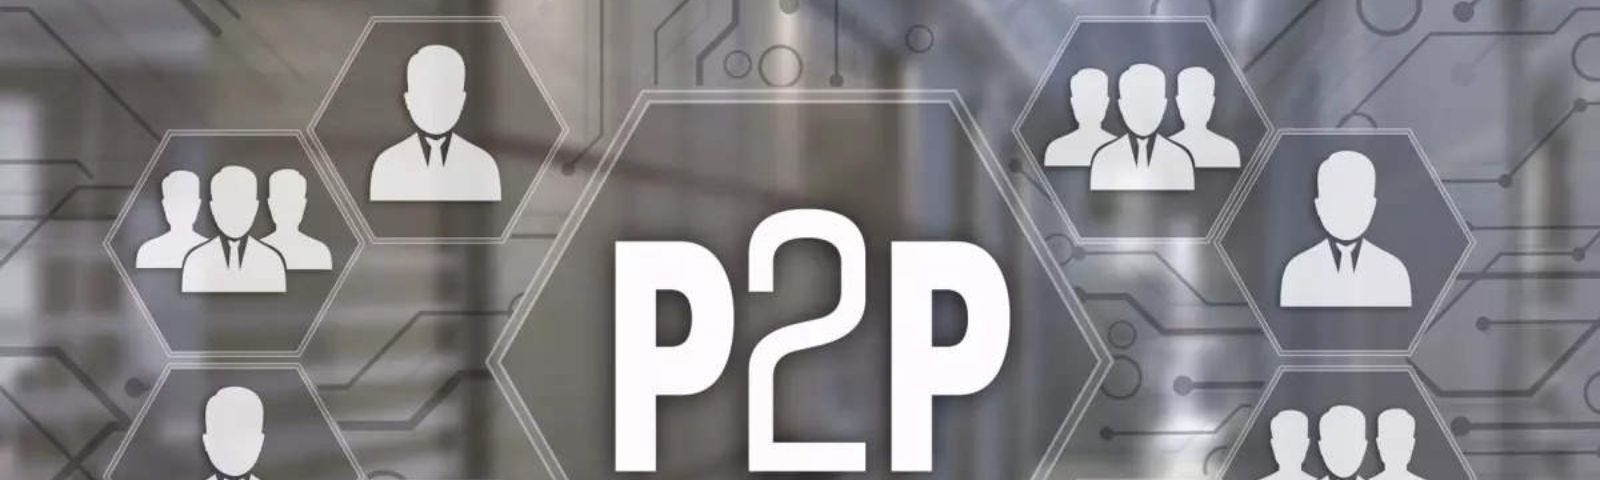 P2P Loan Technology